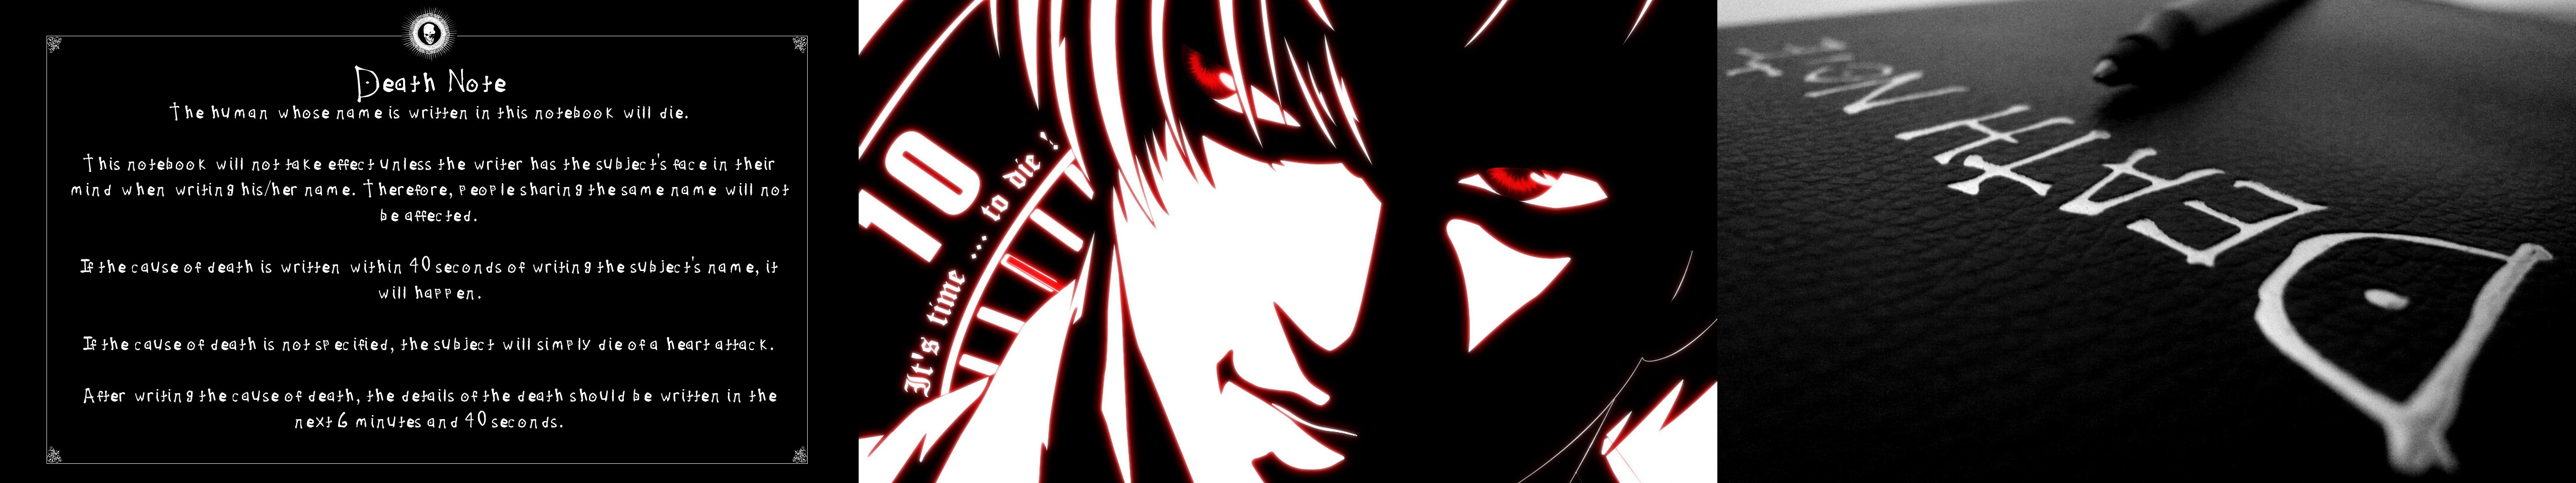 Death Note Anime Wallpaper - HD Wallpaper 